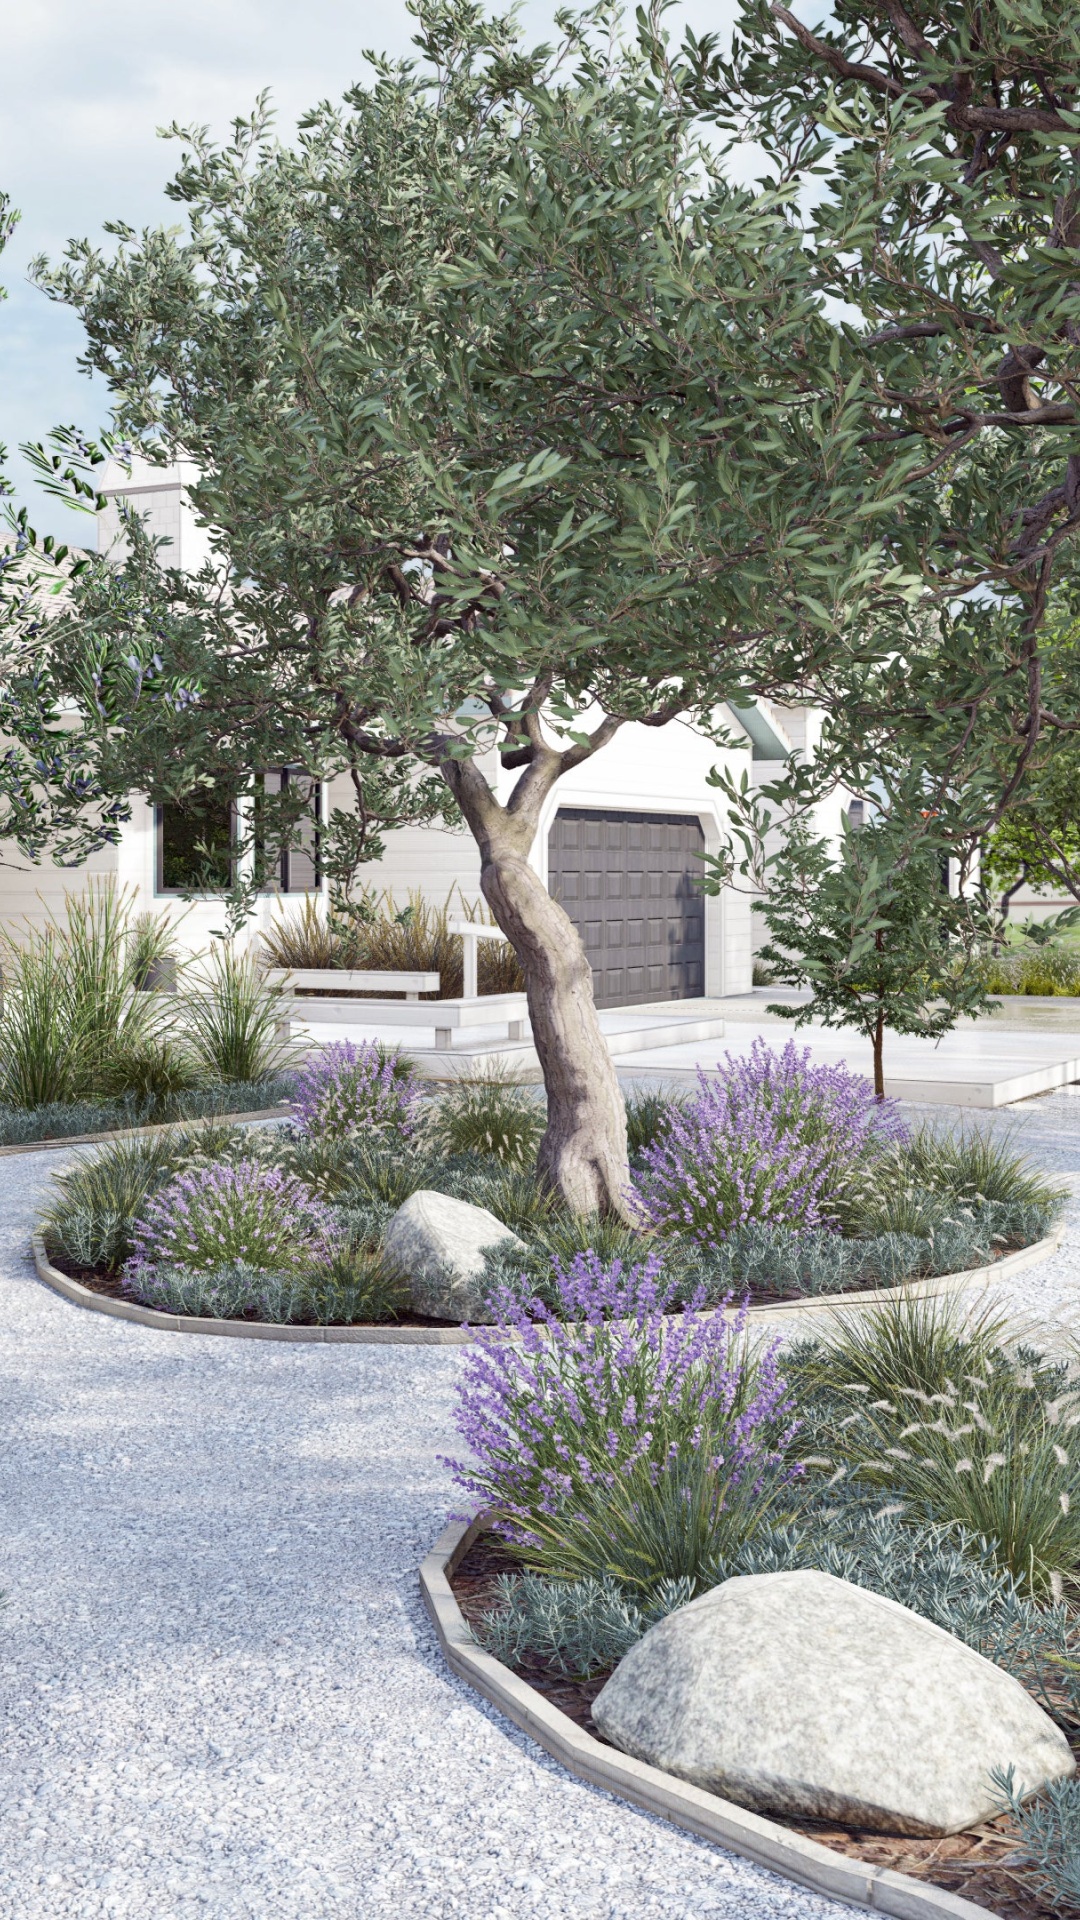 Outdoor Gardens Design Tips for Creating a Beautiful Outdoor Oasis